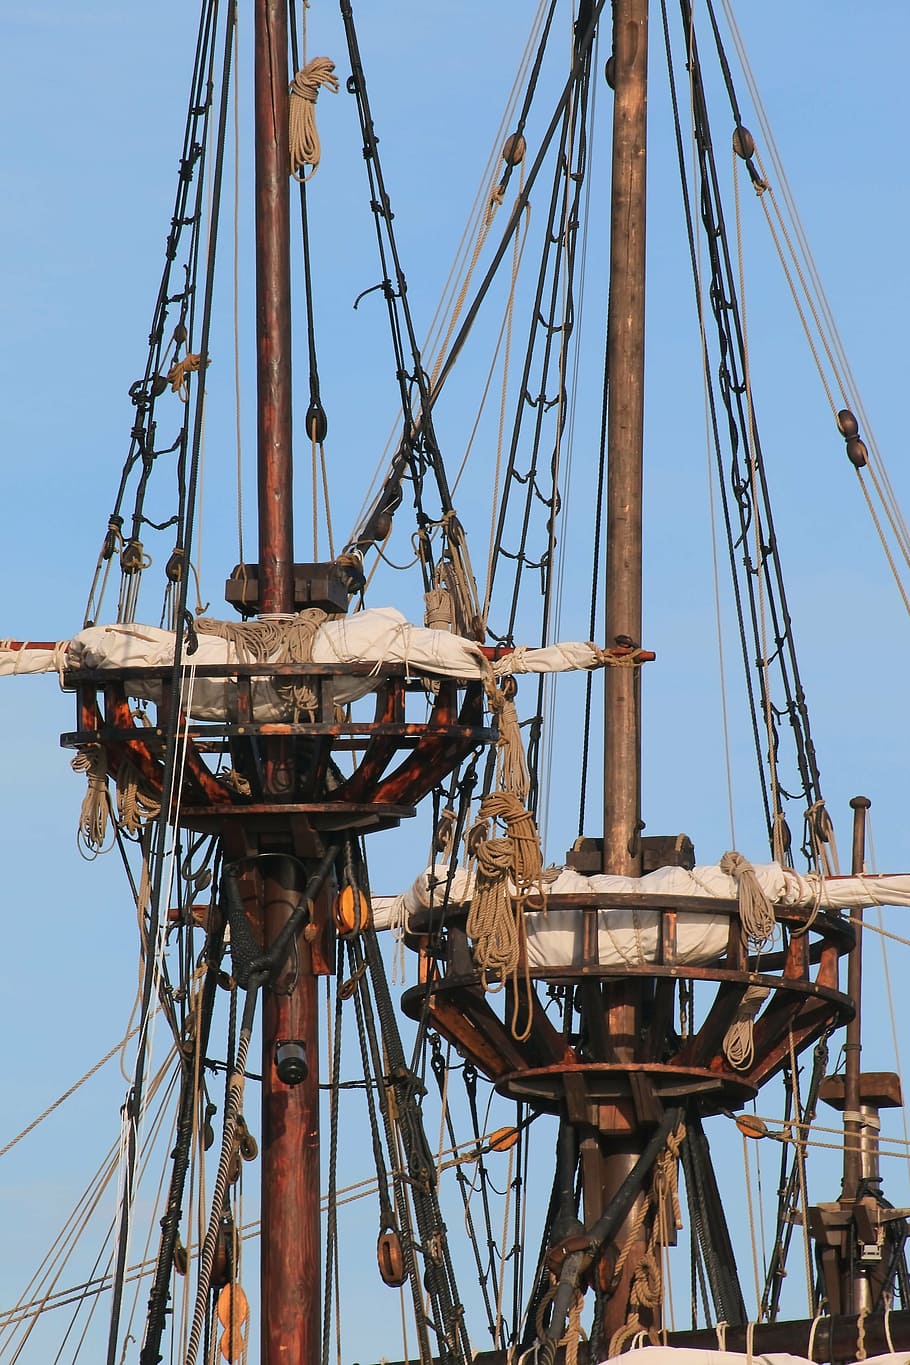 pirate ship, sail, masts, sea, ship, rigging, cordage, mast, dew, view details